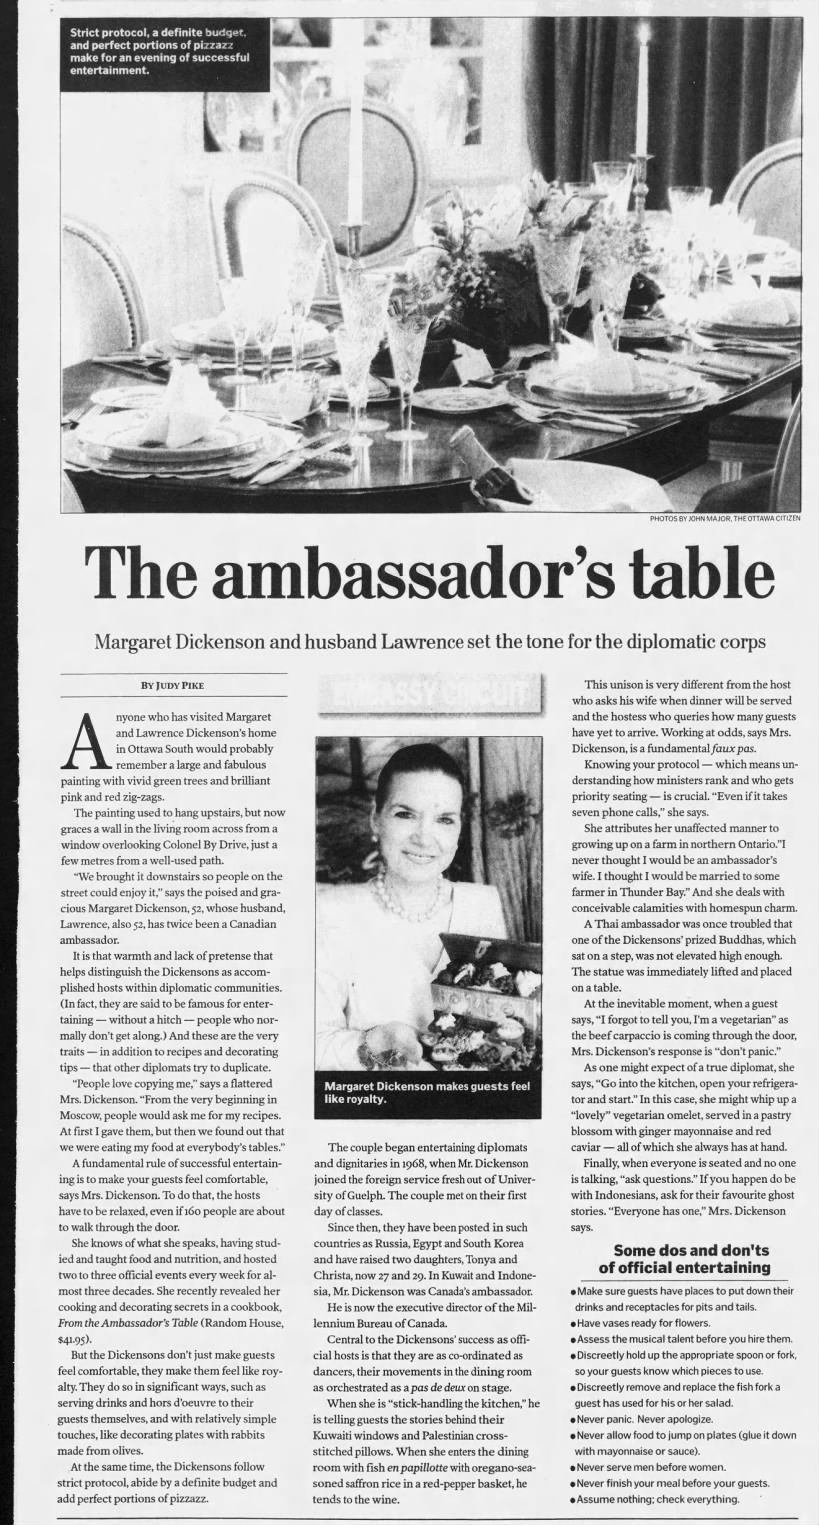 Judy Pike, "The ambassador's table."